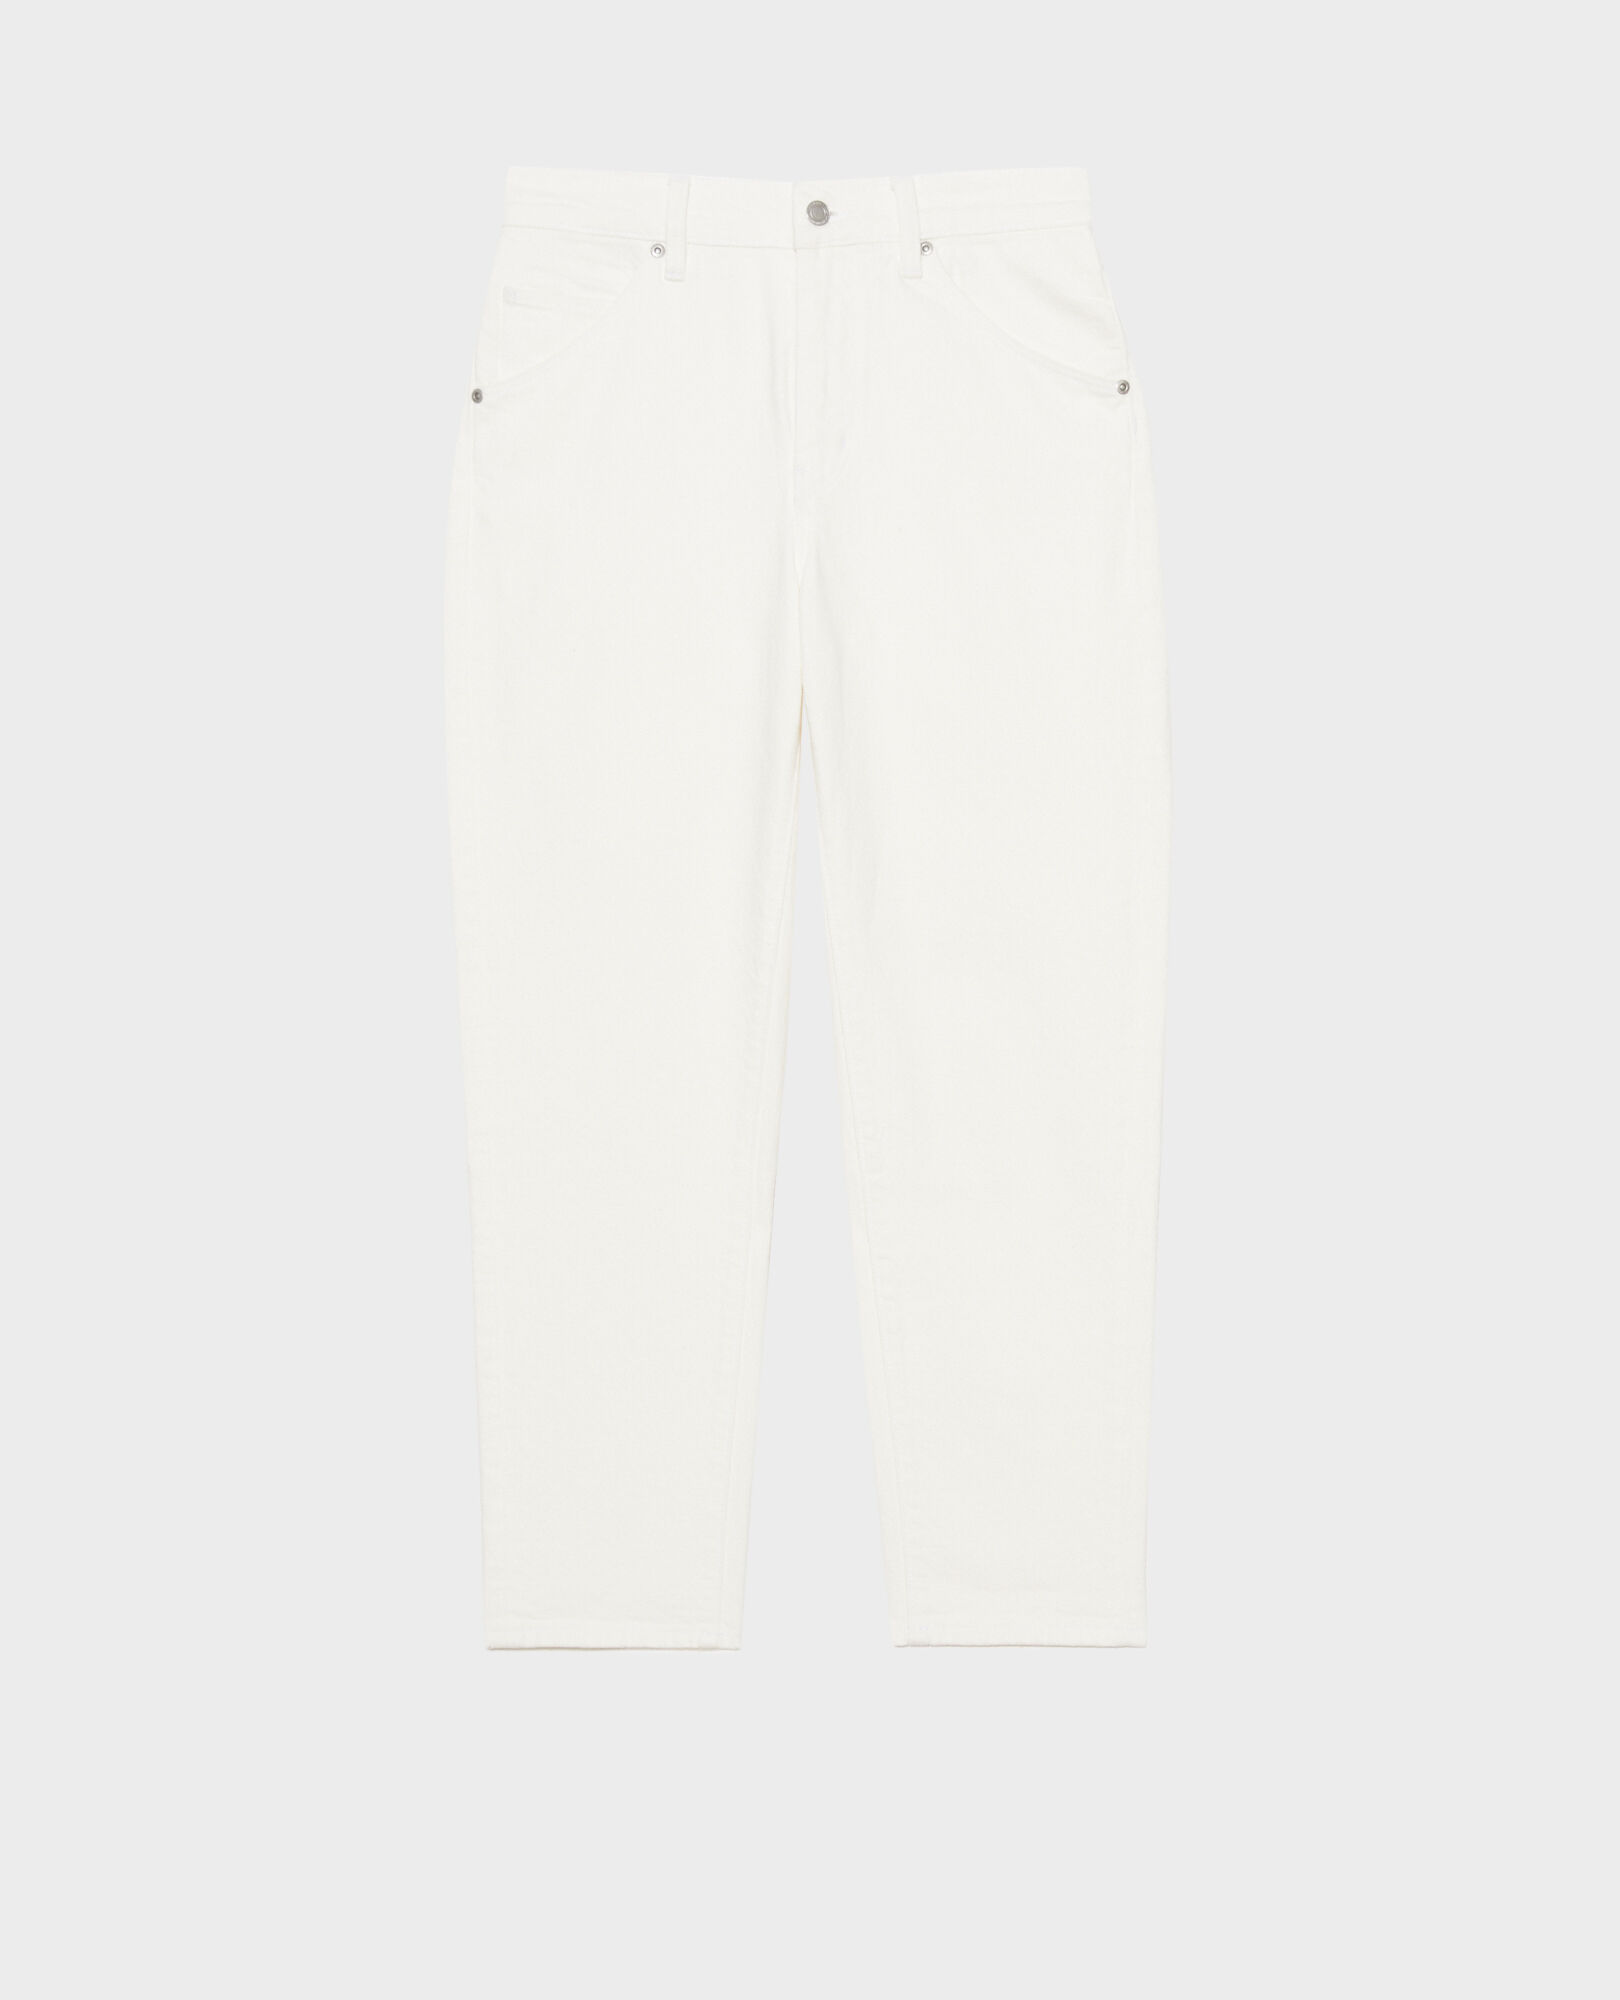 RITA - SLOUCHY - Jeans amplios de algodón 108 denim white 2spe330c62